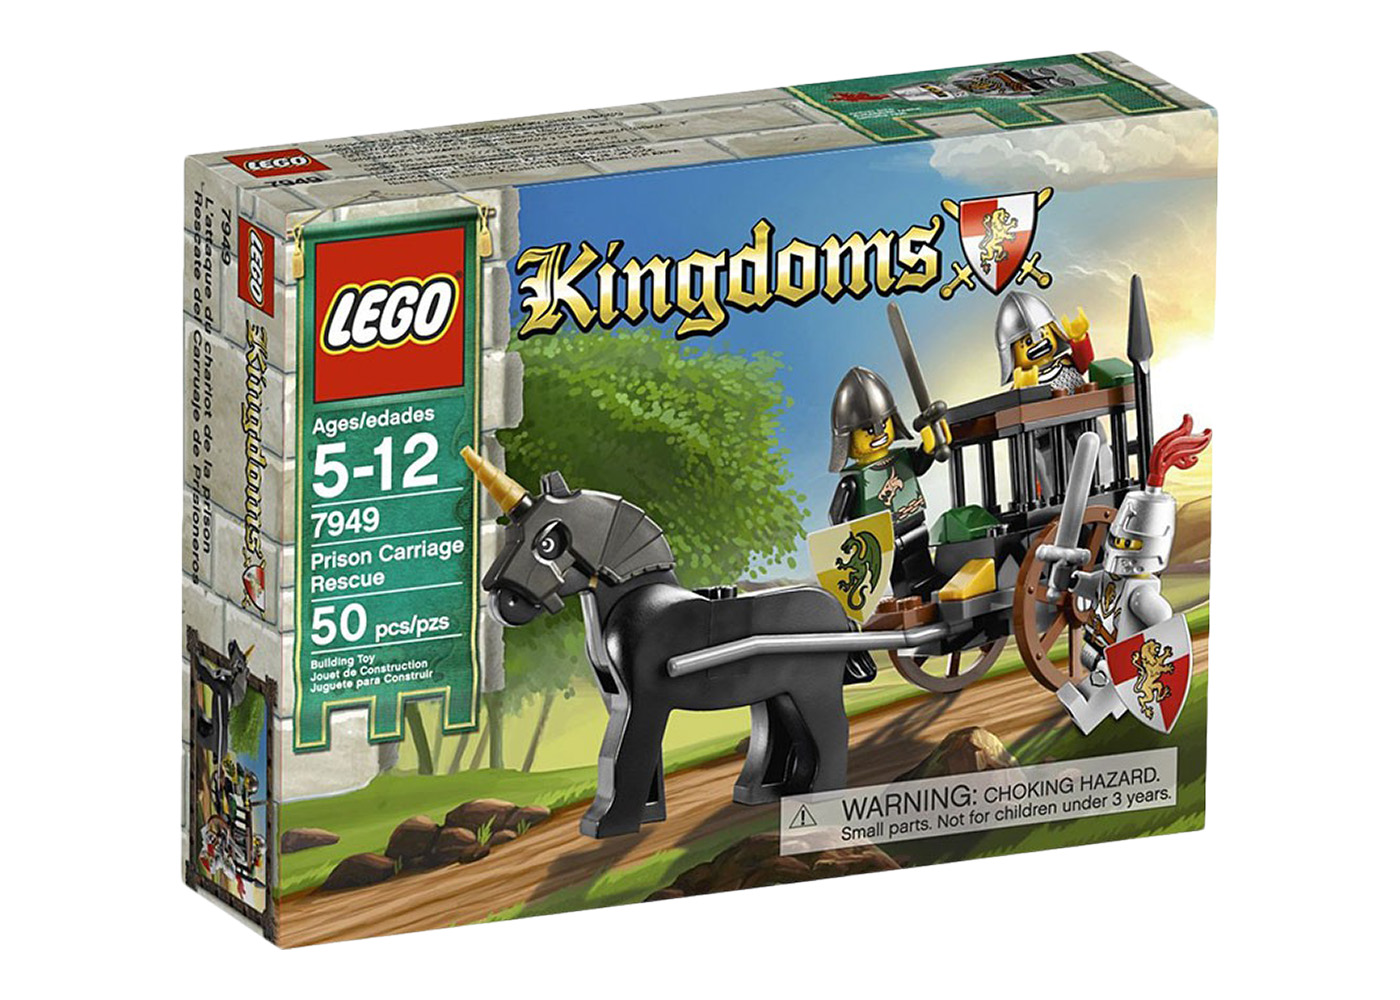 LEGO Kingdoms Prison Carriage Rescue Set 7949